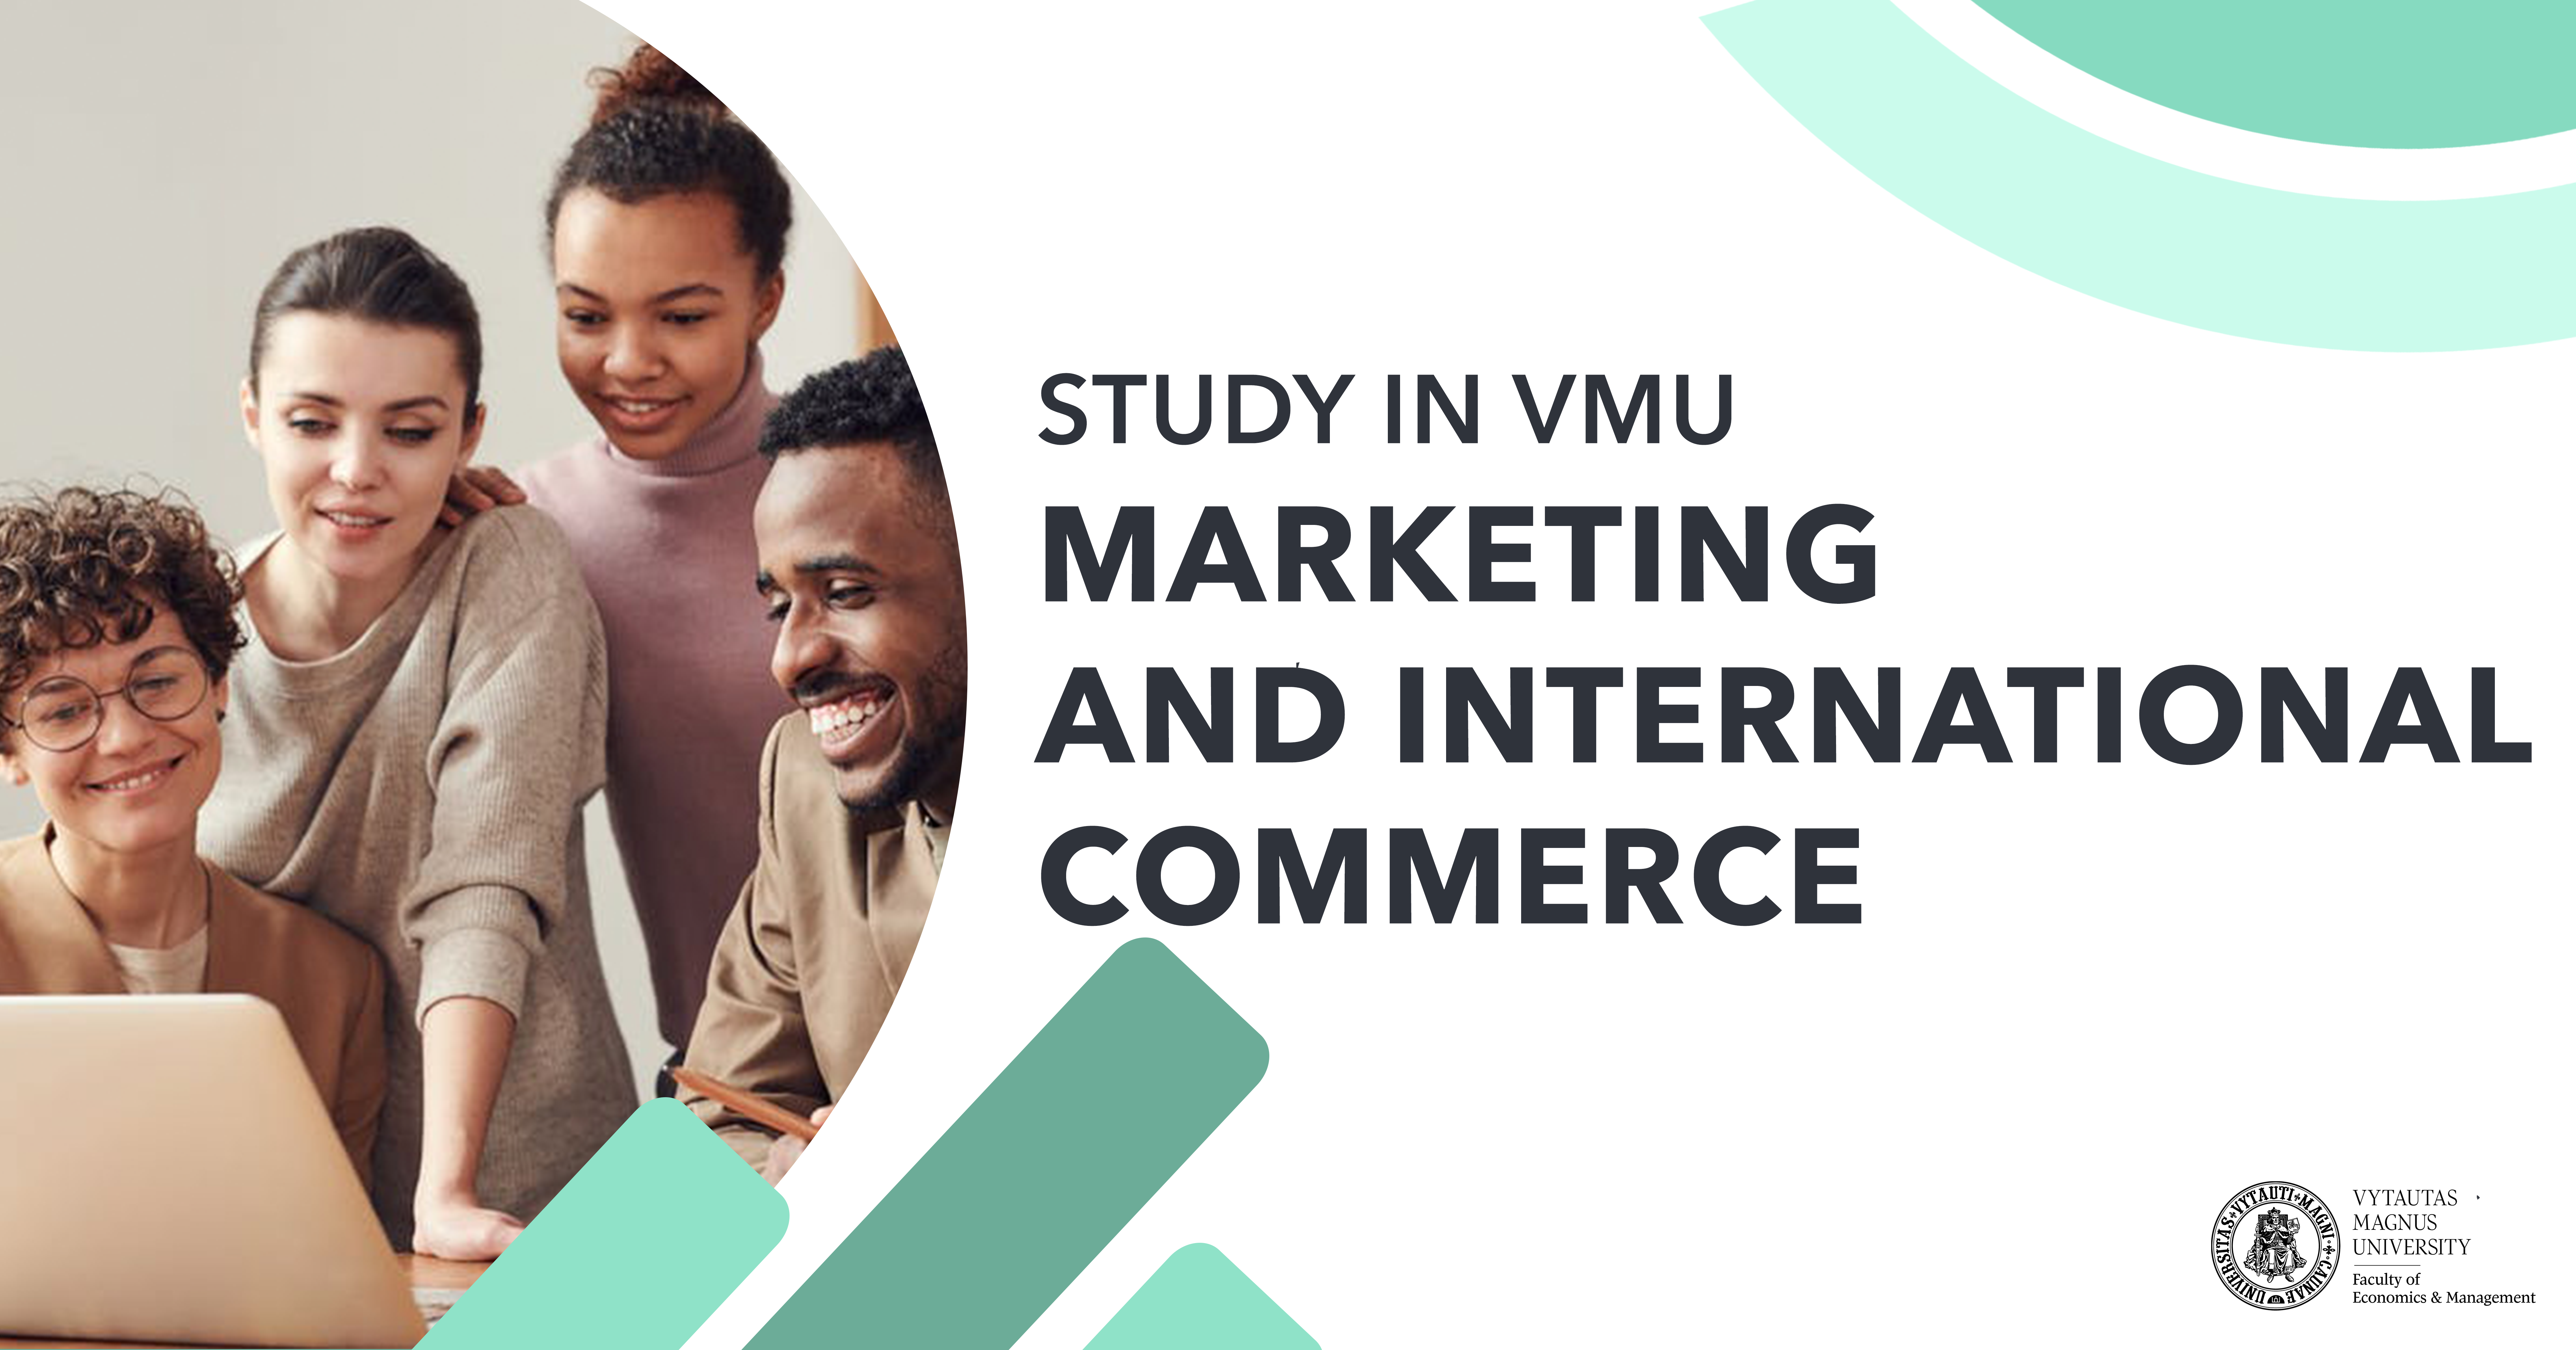 VMU marketing and international commerce